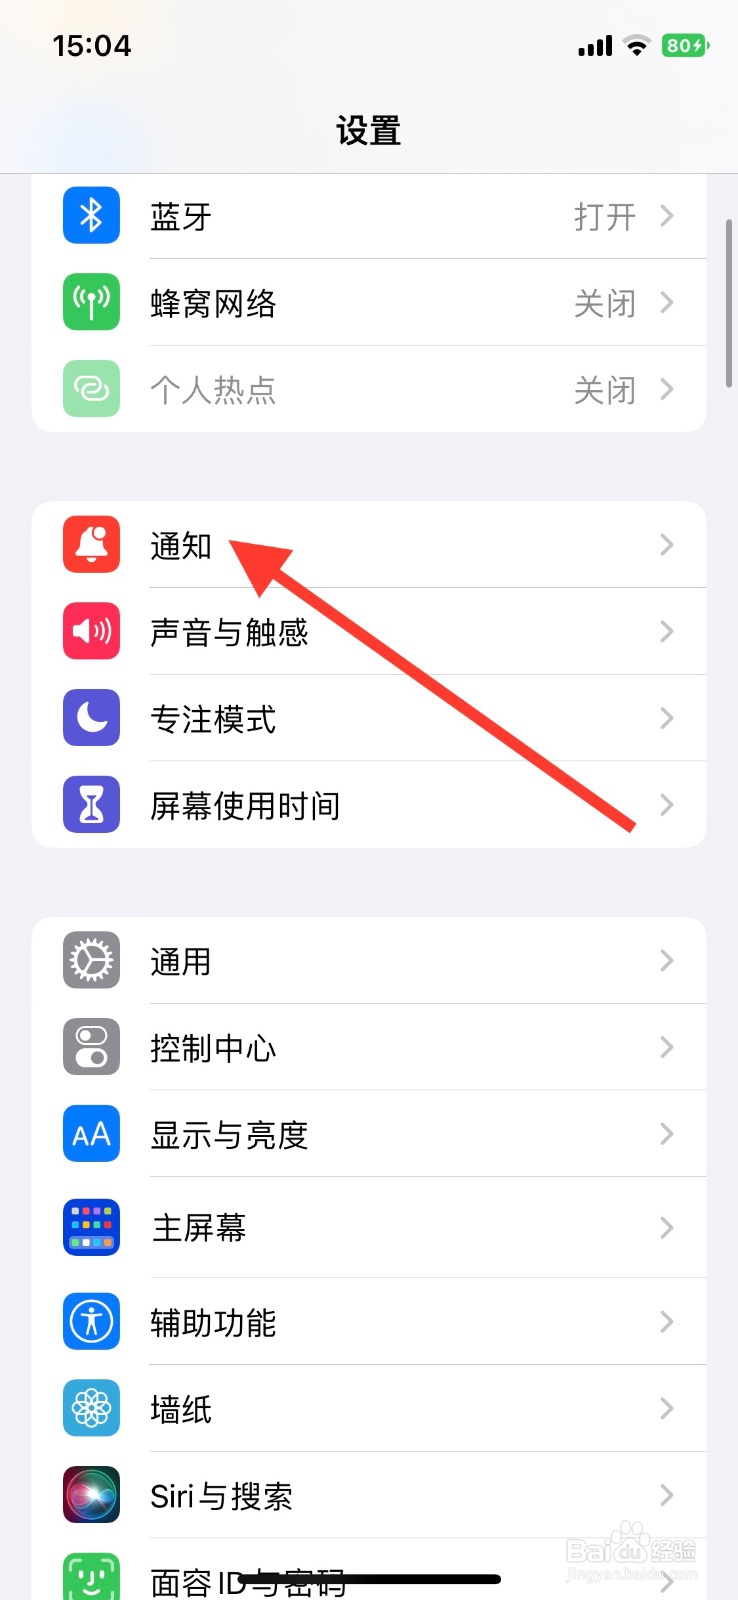 <b>iPhone锁定屏幕【允许】岭南通app提醒消息通知</b>